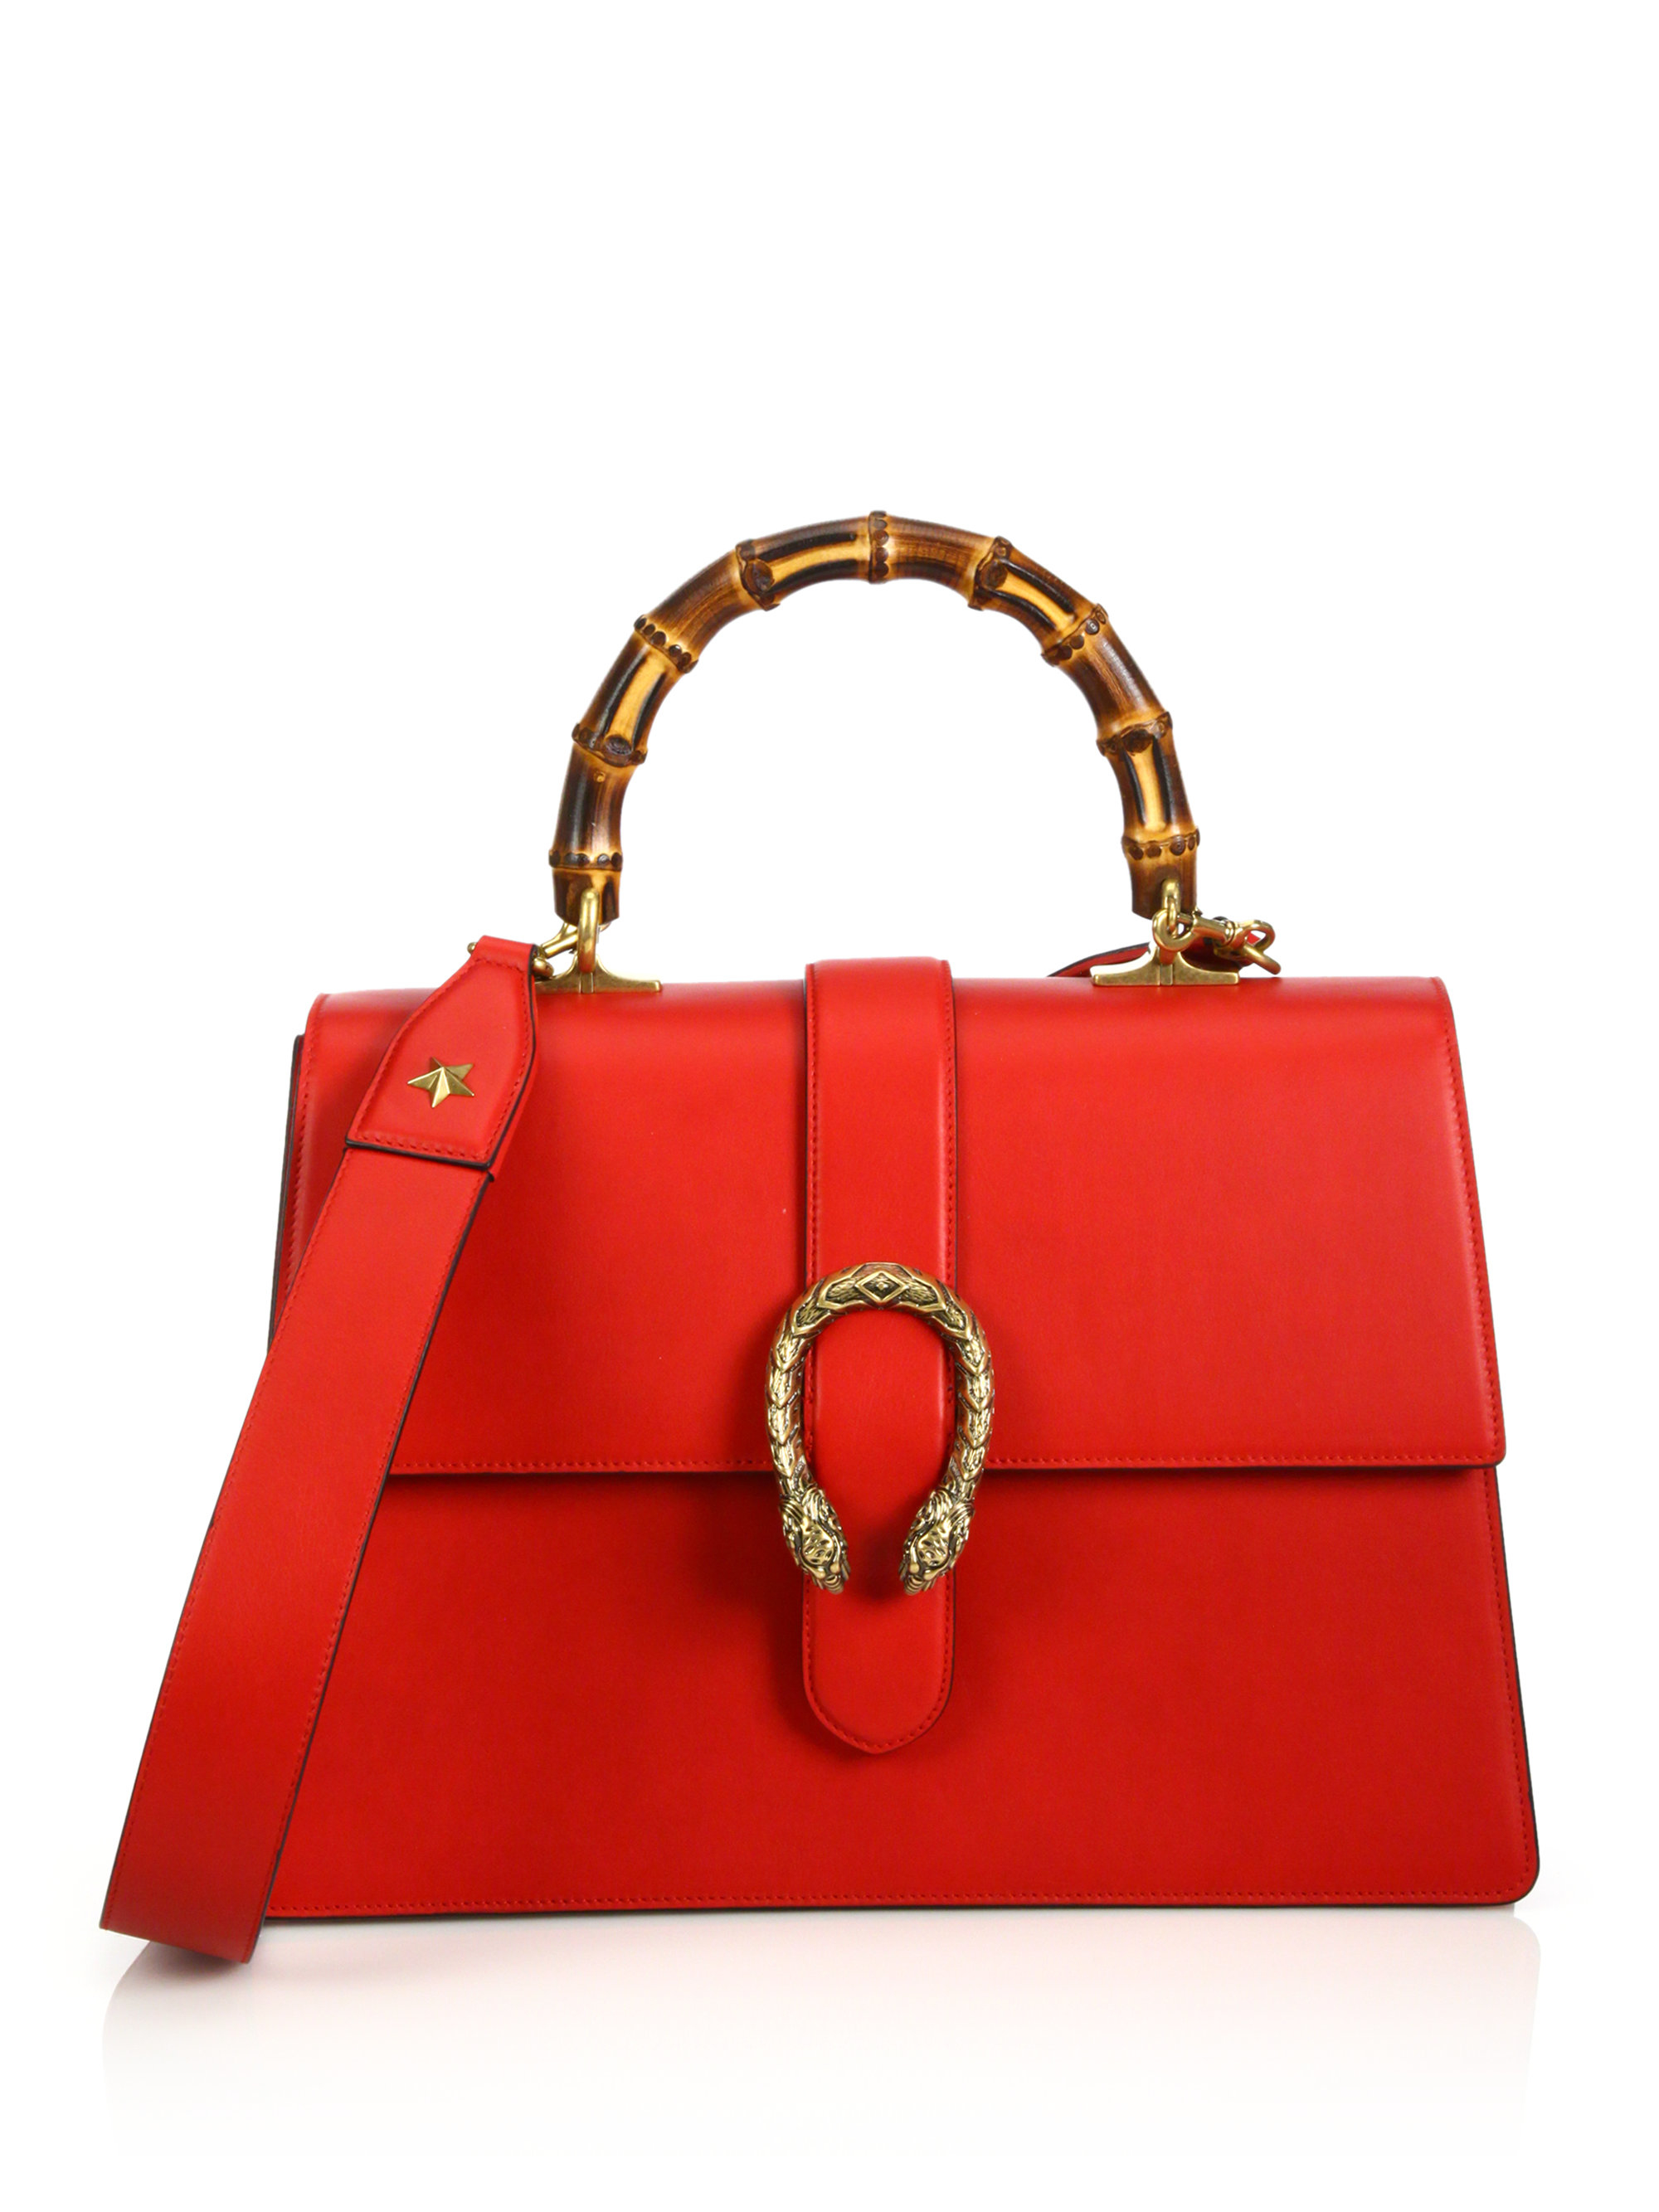 Gucci Dionysus Leather Top-handle Bag in Metallic | Lyst